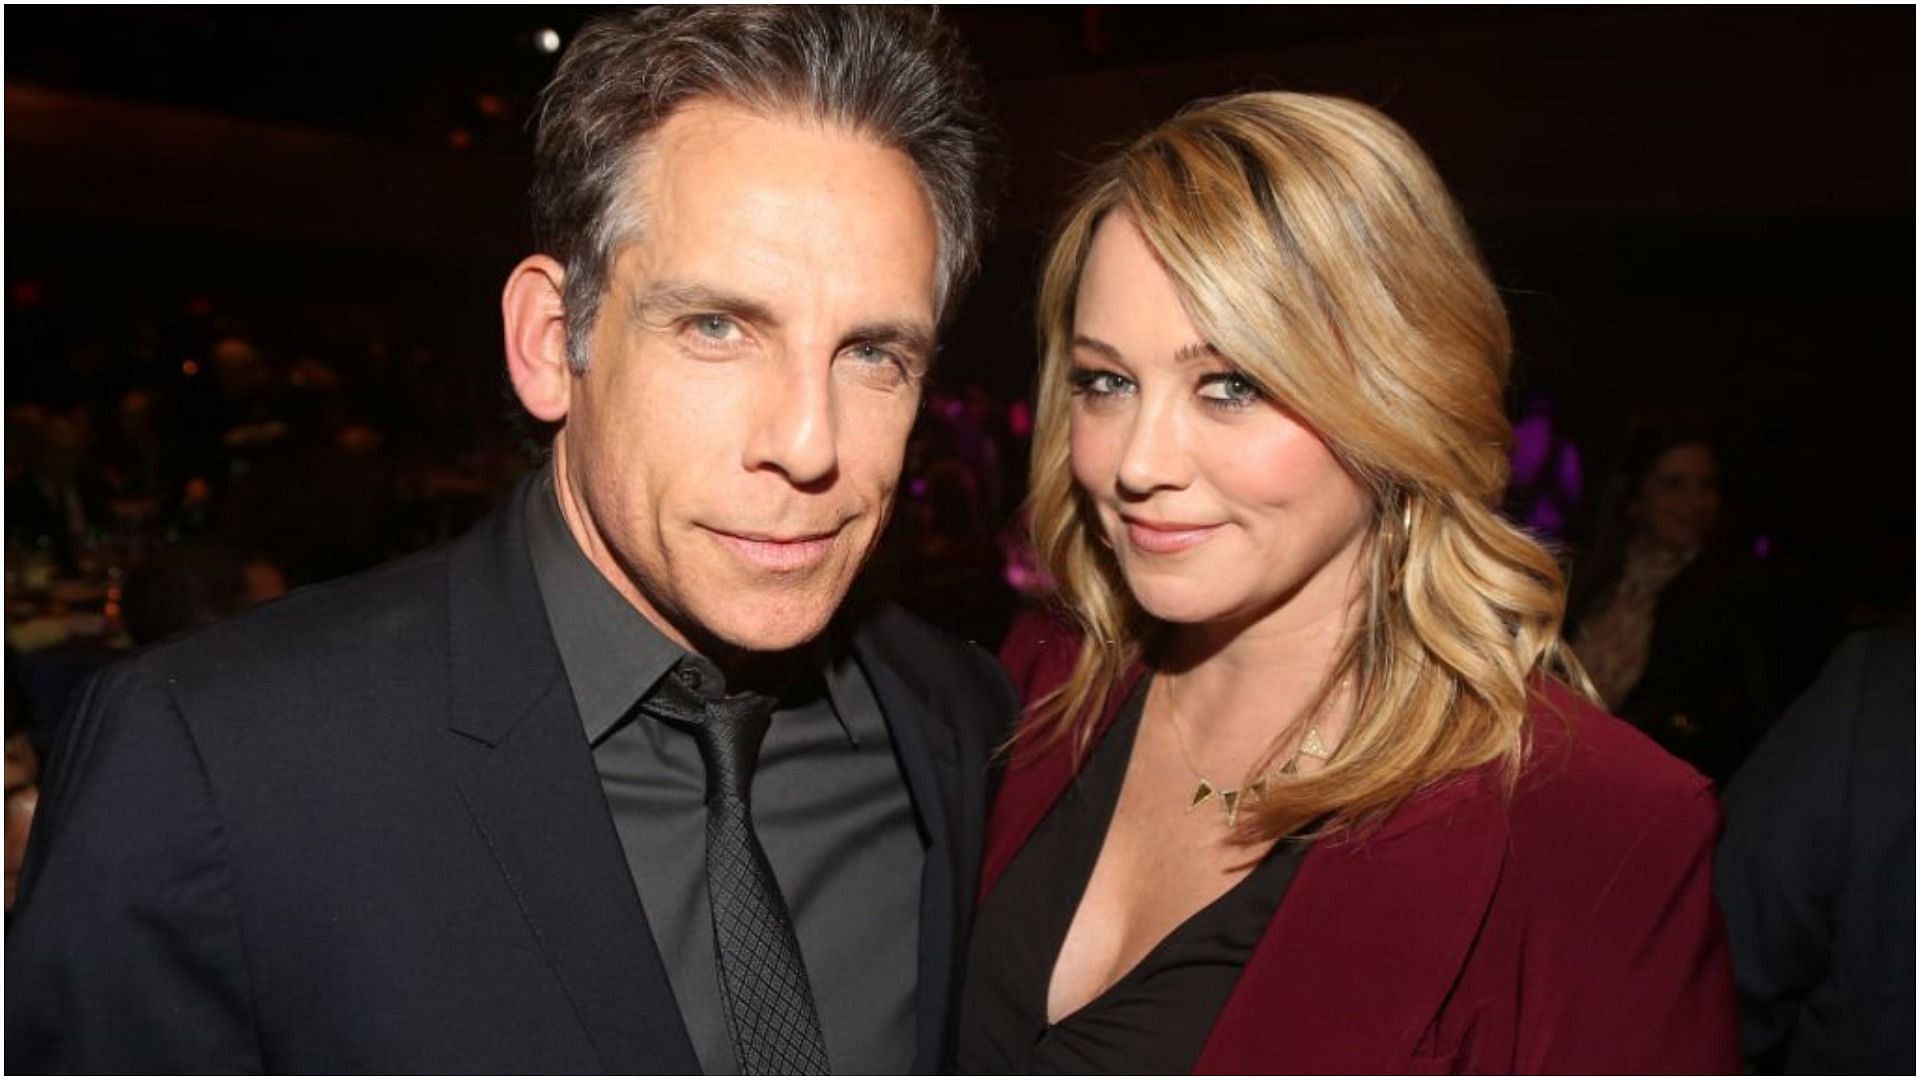 Ben Stiller and Christine Taylor have rekindled their marriage (Image via Getty Images/Bruce Glikas)